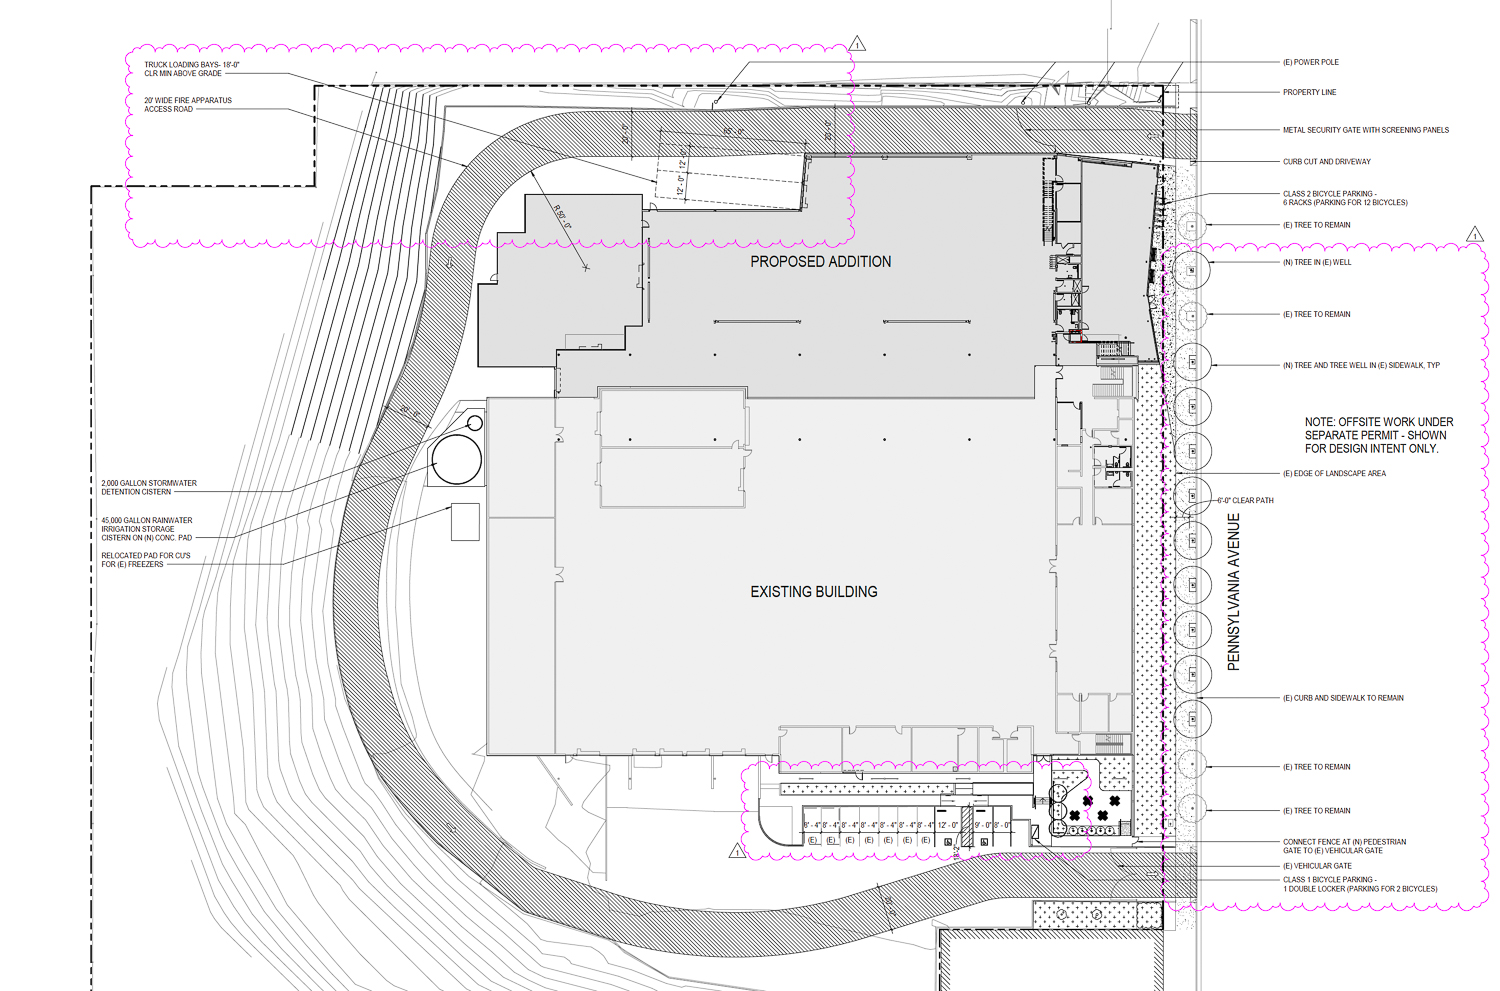 900 Pennsylvania Avenue expansion floor plan, rendering by EHDD